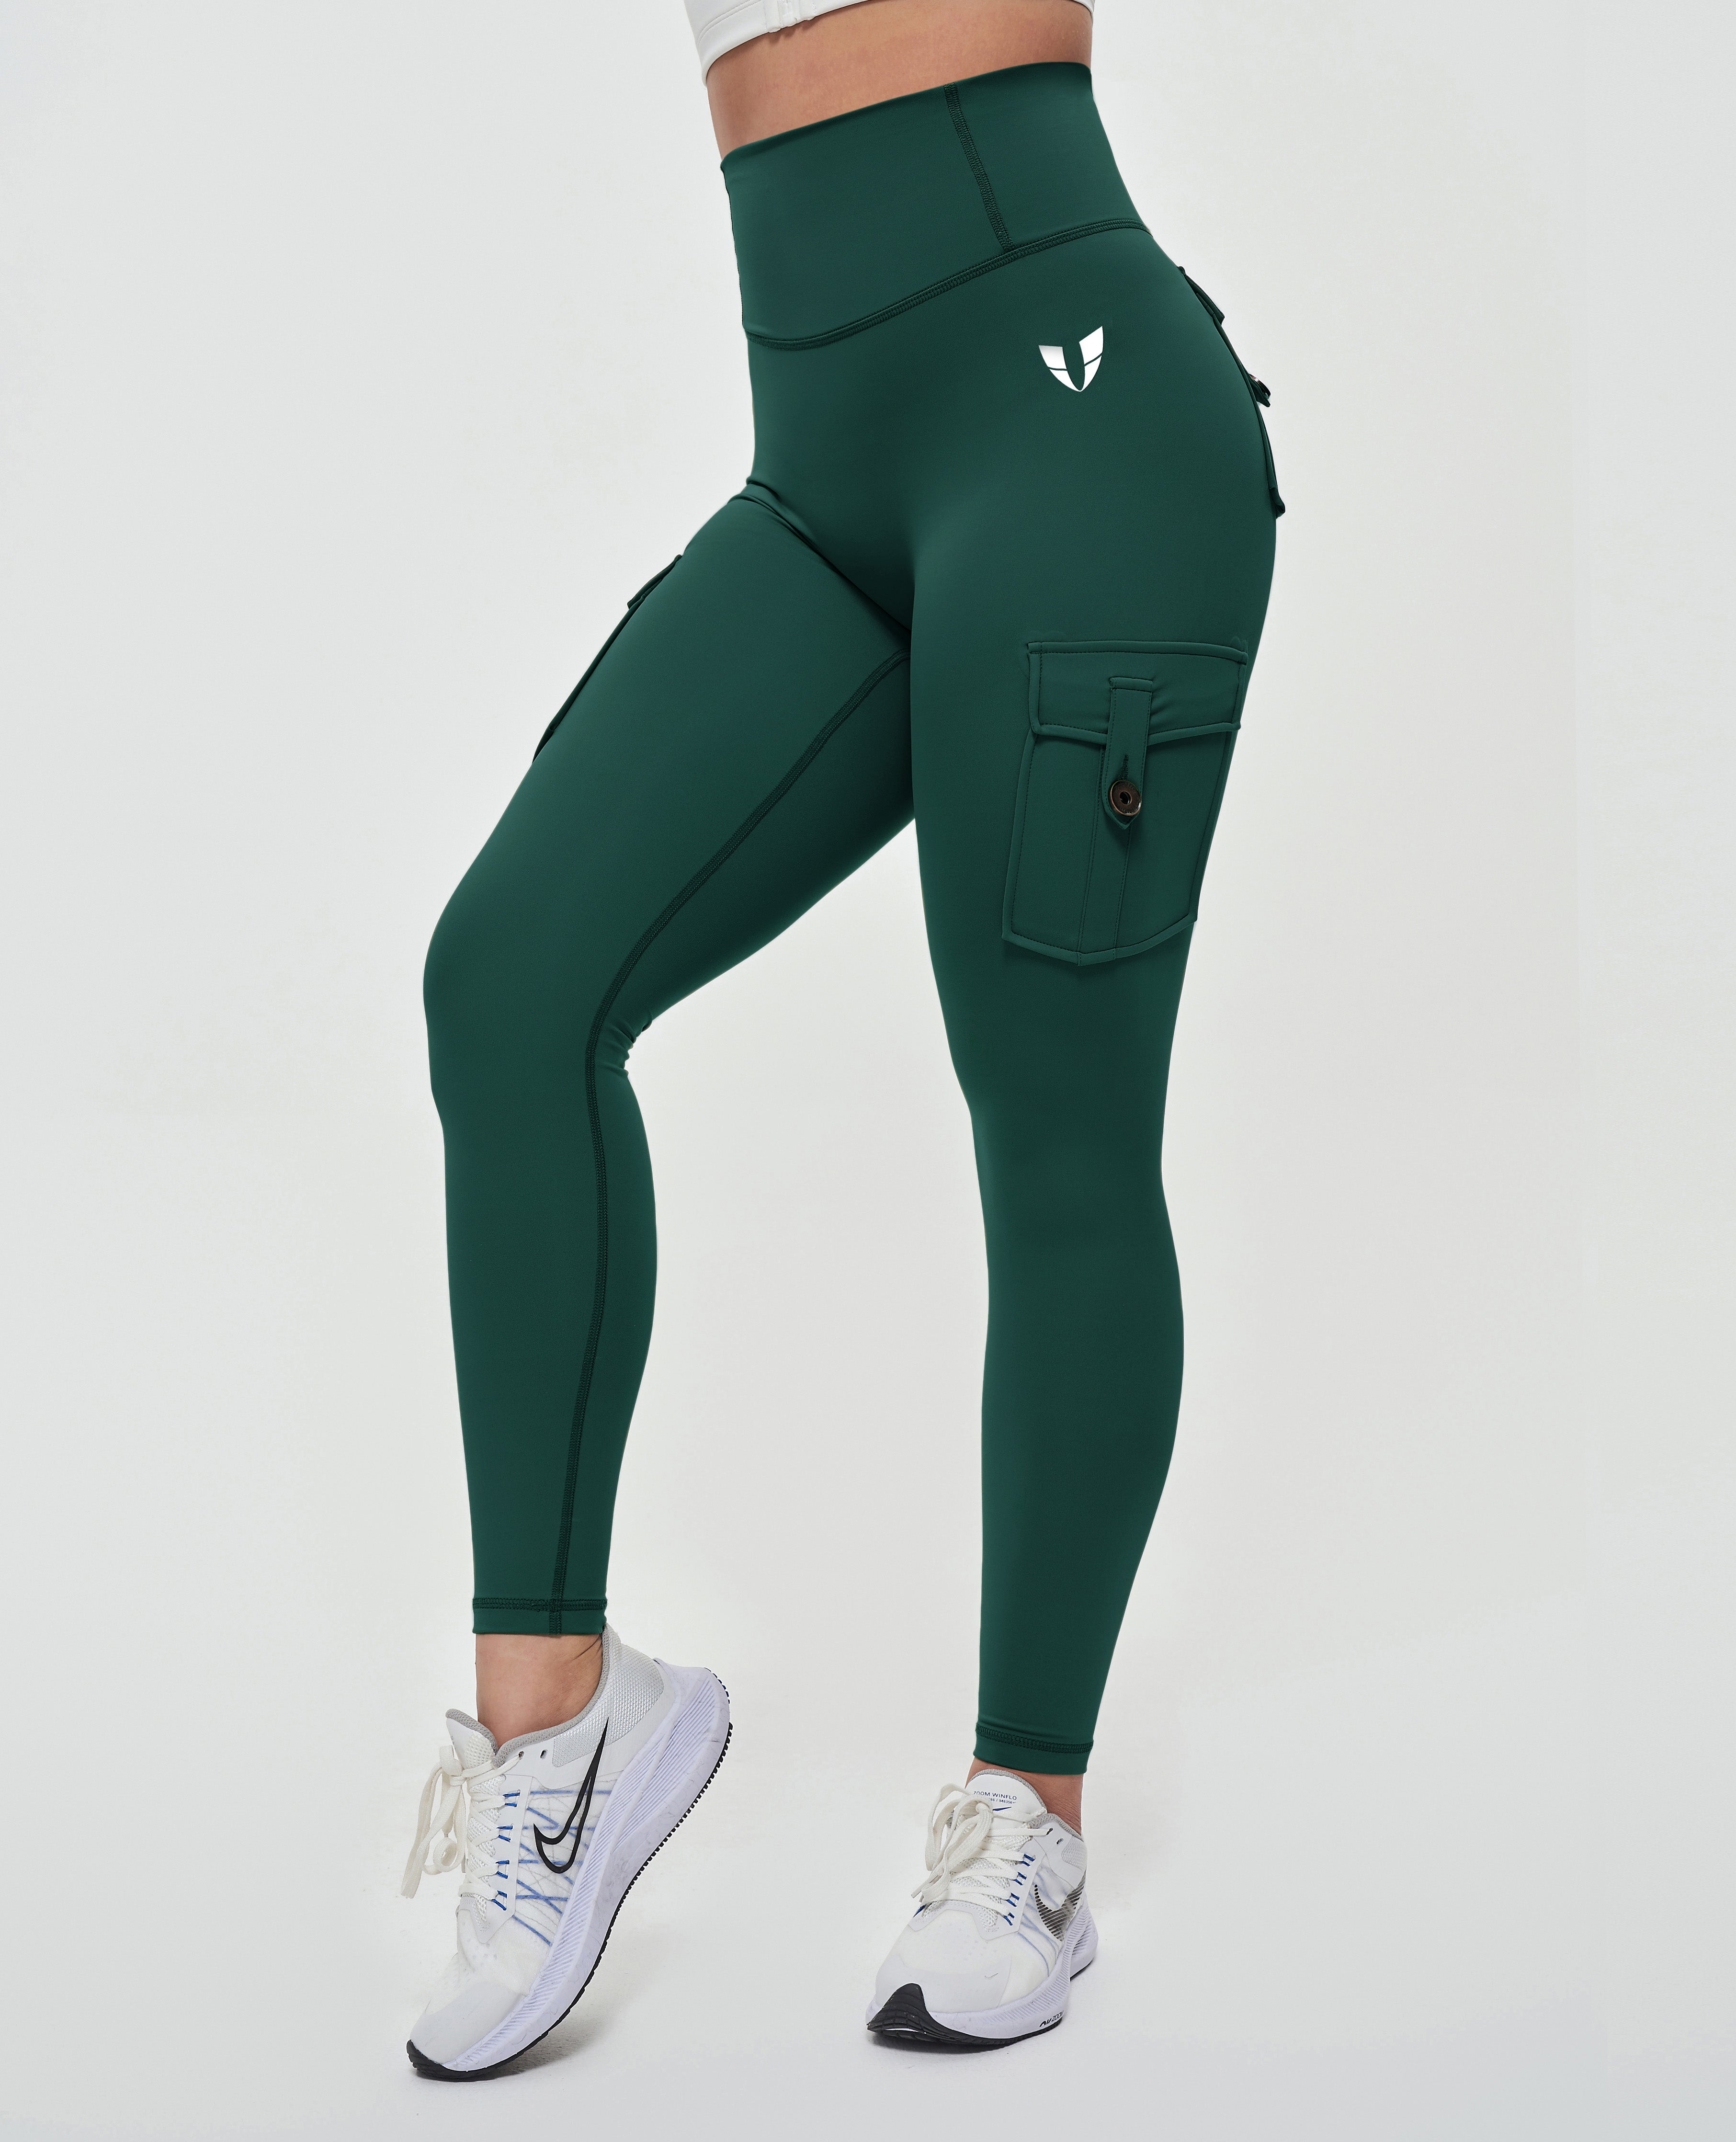 Buy Go Colors Women Solid Leaf Green Slim Fit Ankle Length Leggings - Tall  Online